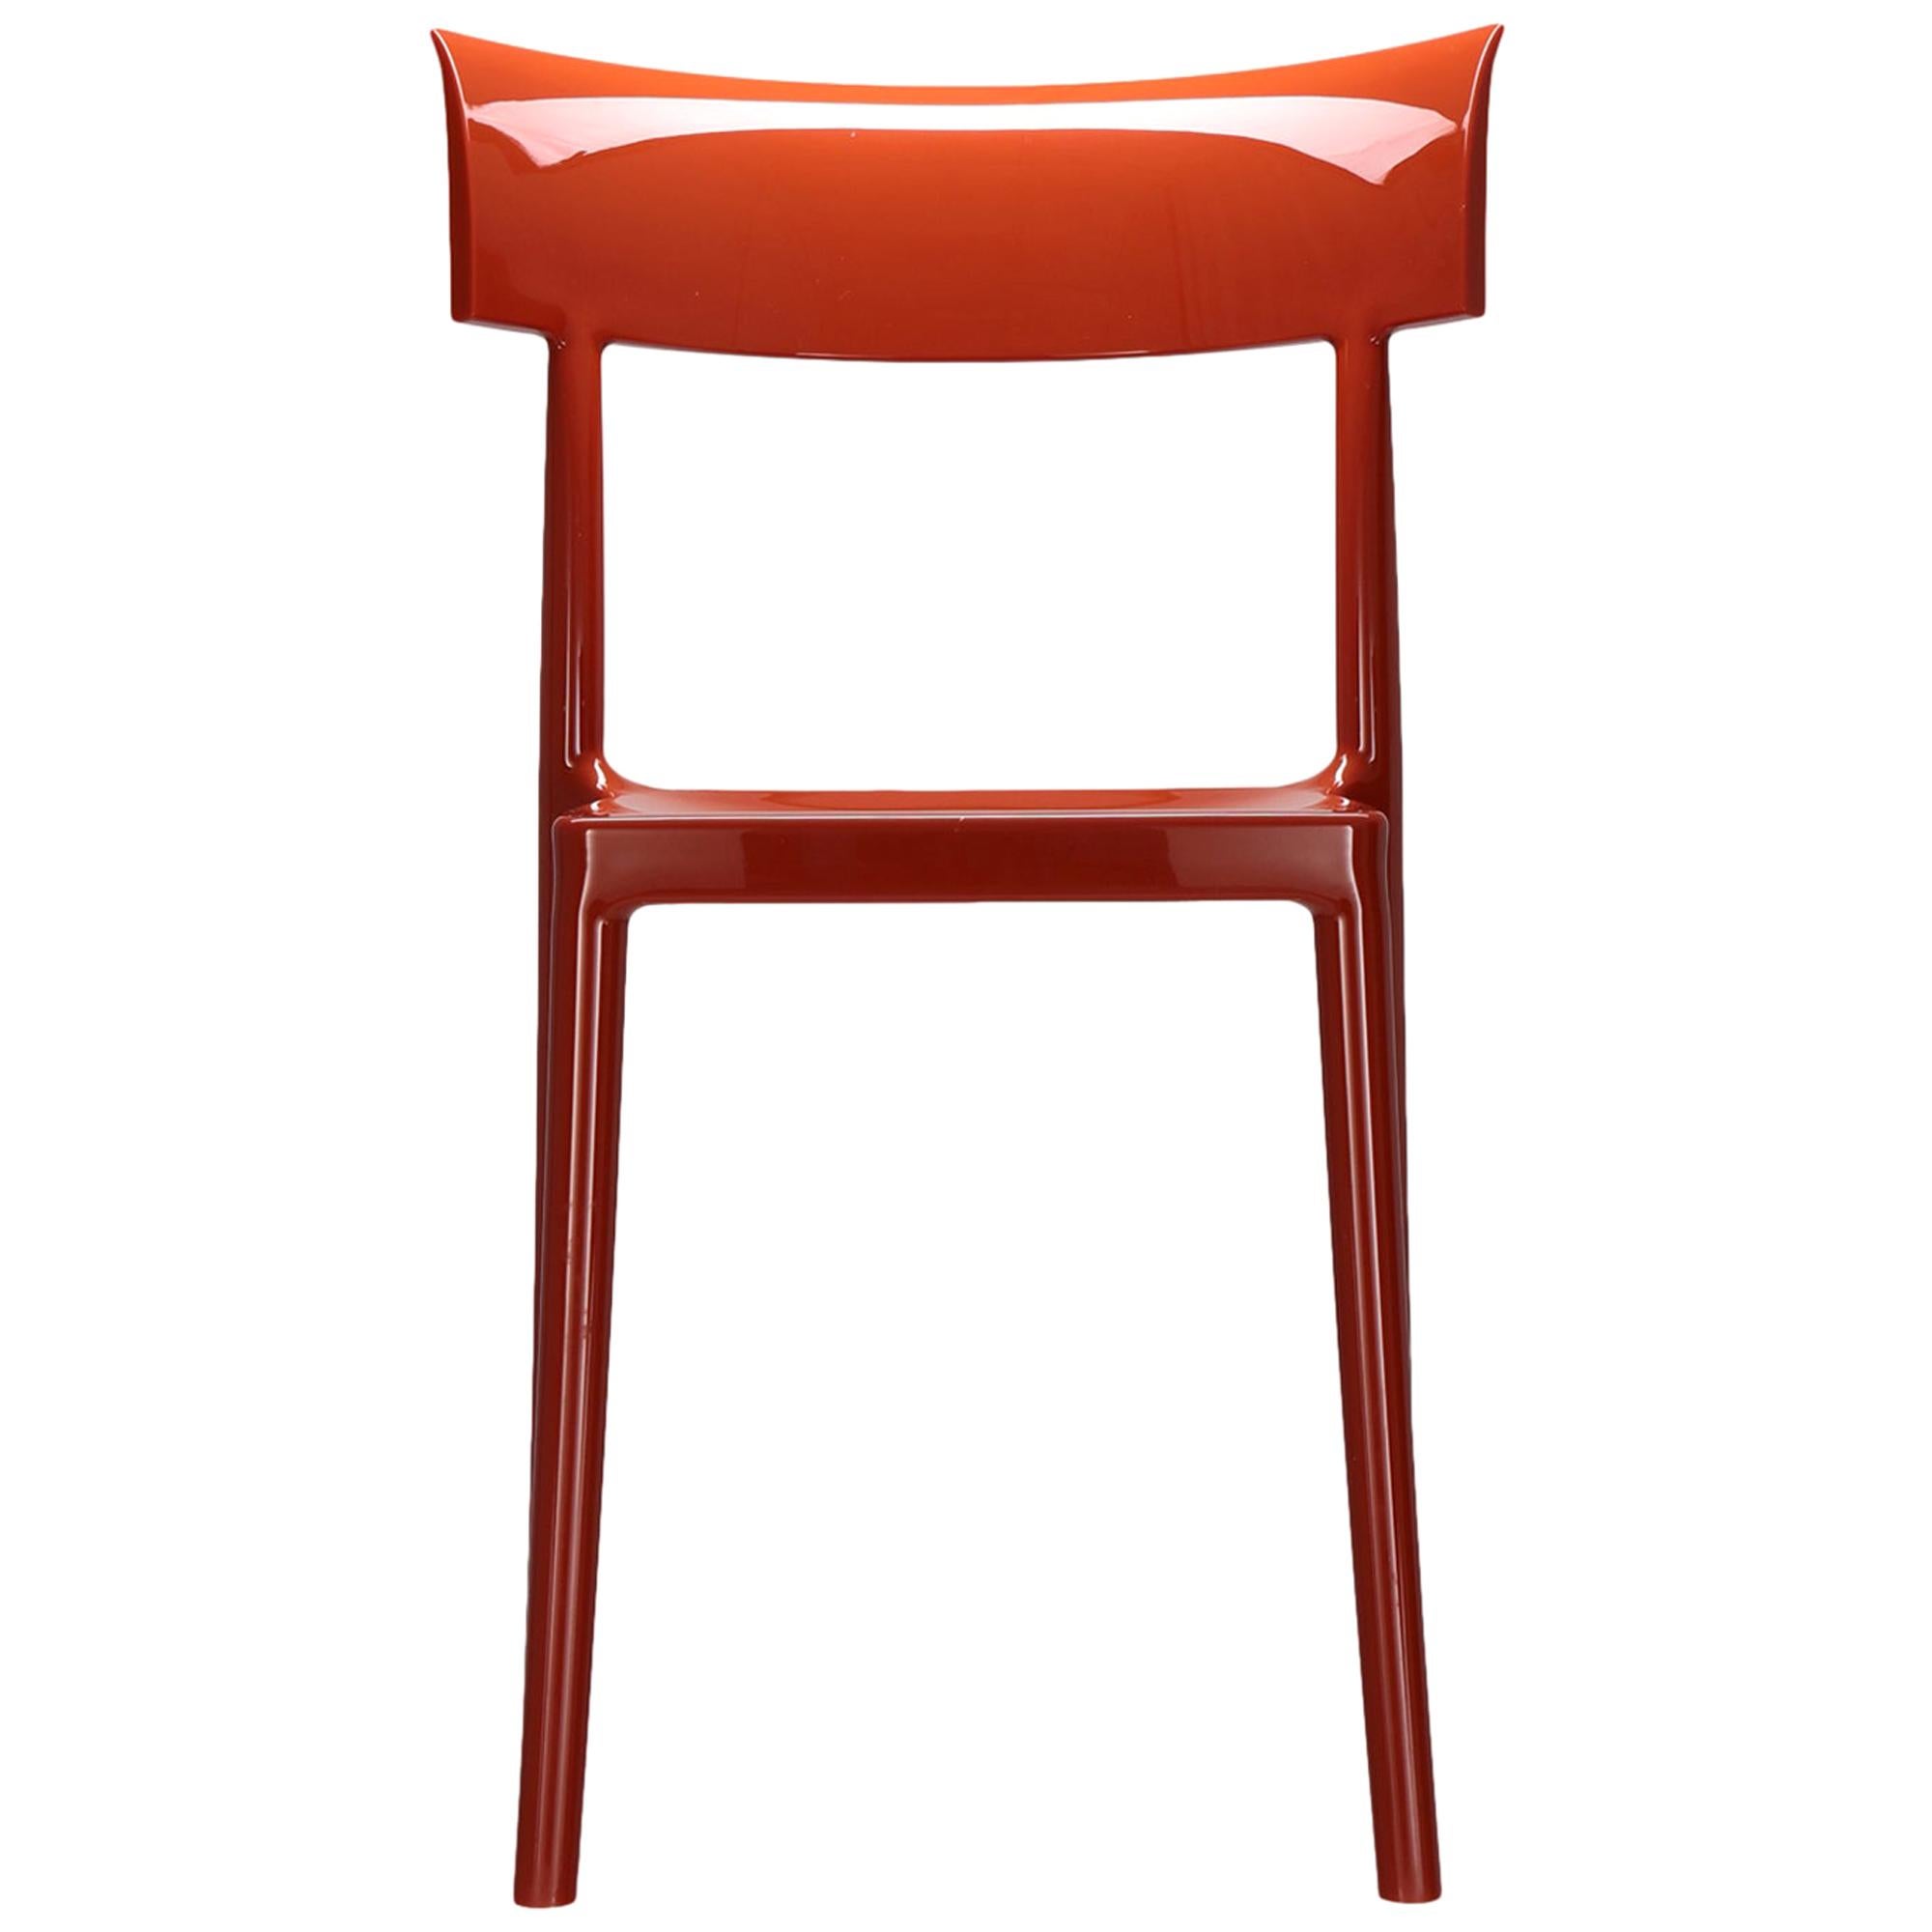 Chaise de marche Kartell avec chat orange rouille de Philippe Starck et Sergio Schito